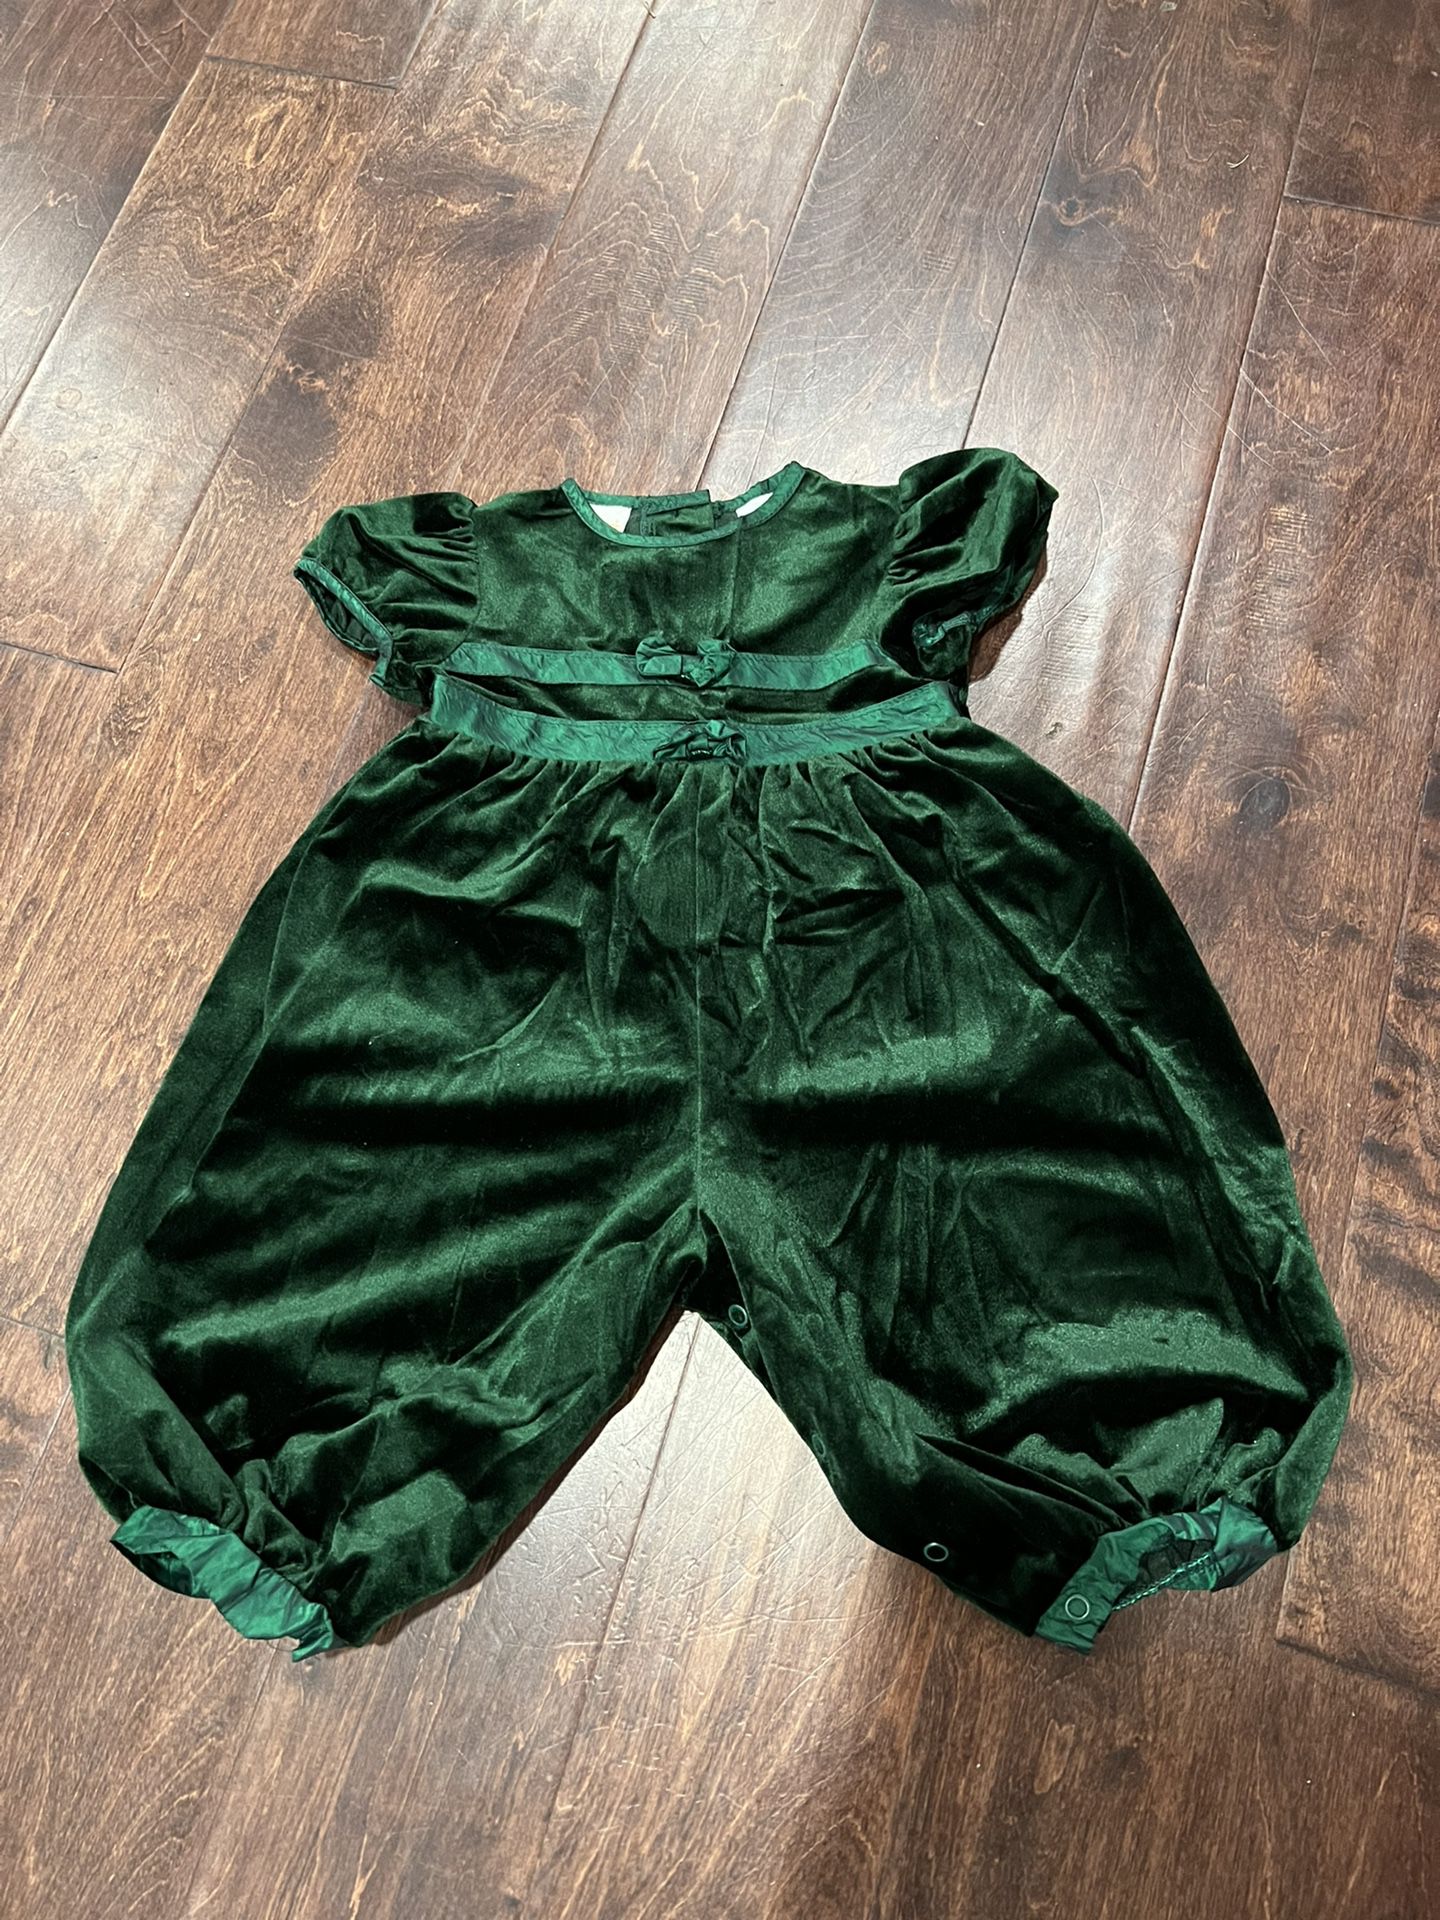 Vintage baby girl bubble romper green velvet size 18 months made in USA OKIE DOK